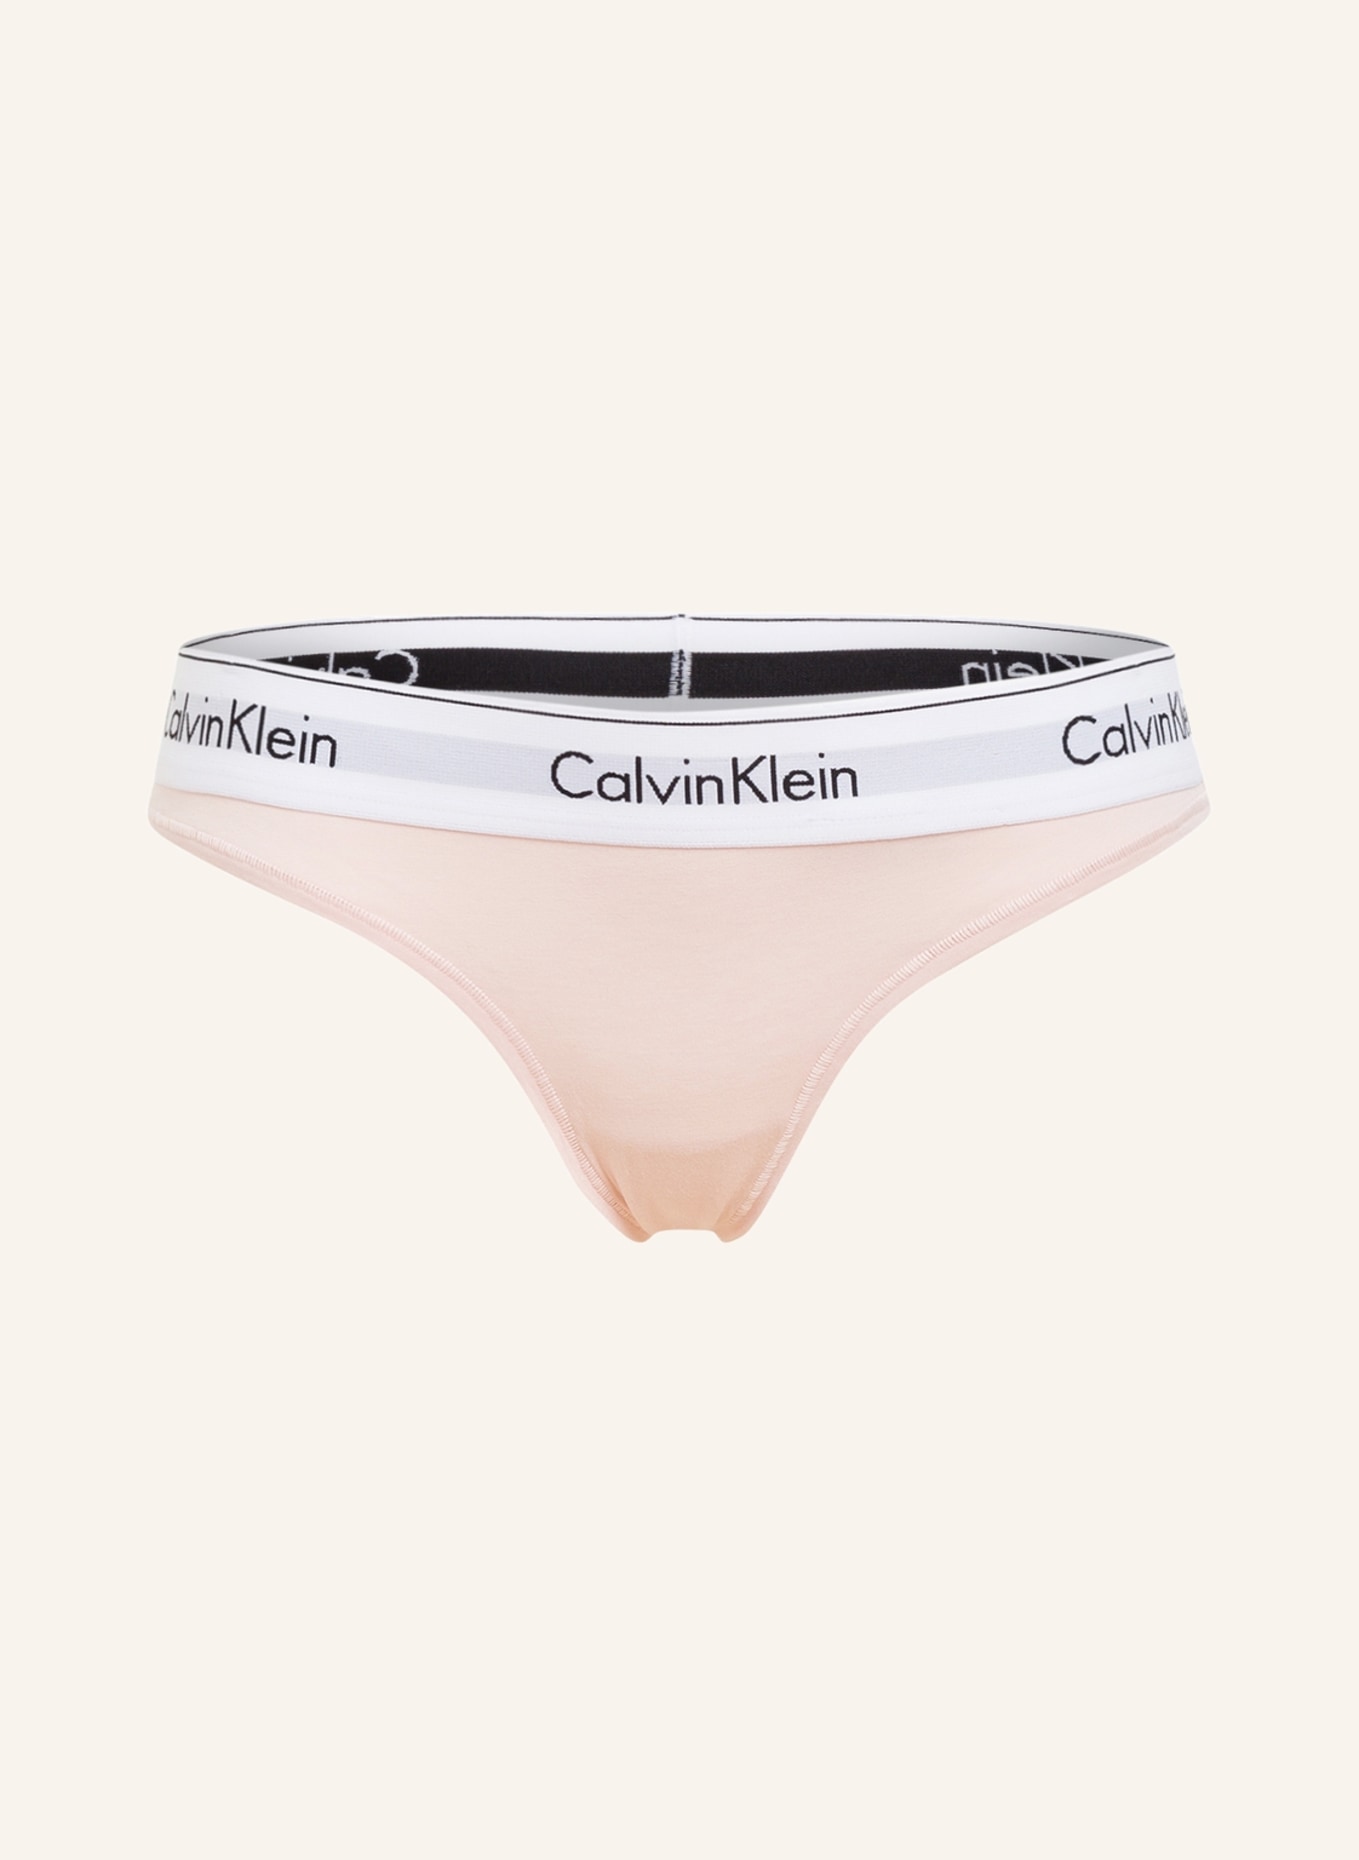 Calvin Klein Thong MODERN COTTON in pink/ white